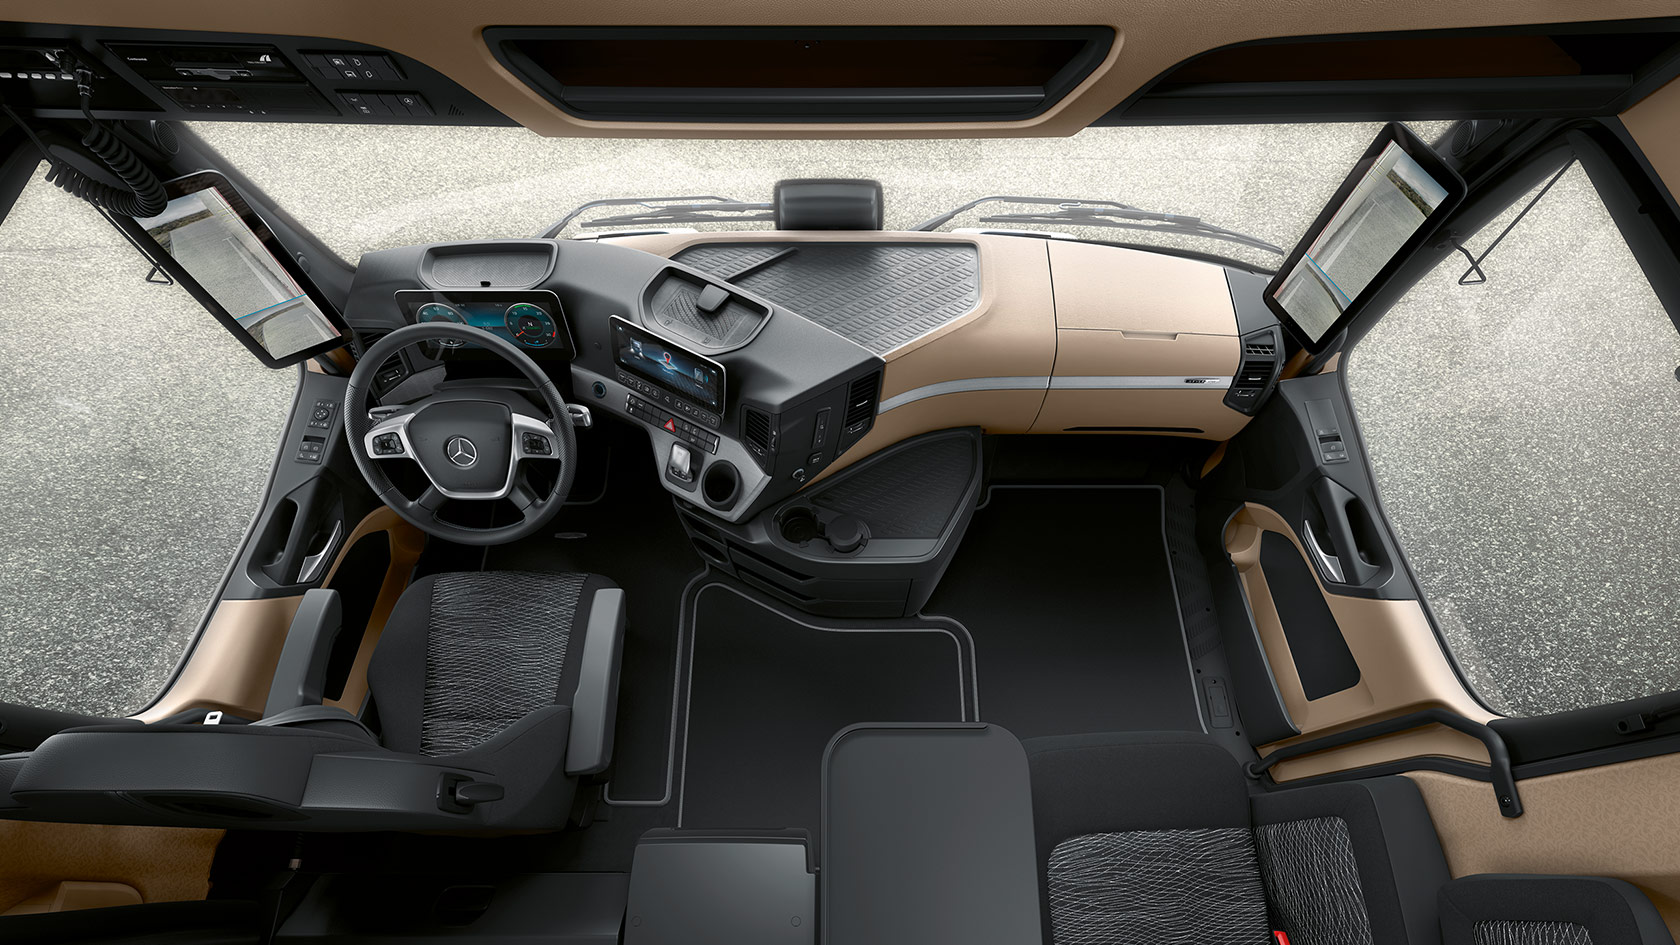 shop claw boundary Actros: Design interior - Mercedes-Benz Trucks - Trucks you can trust